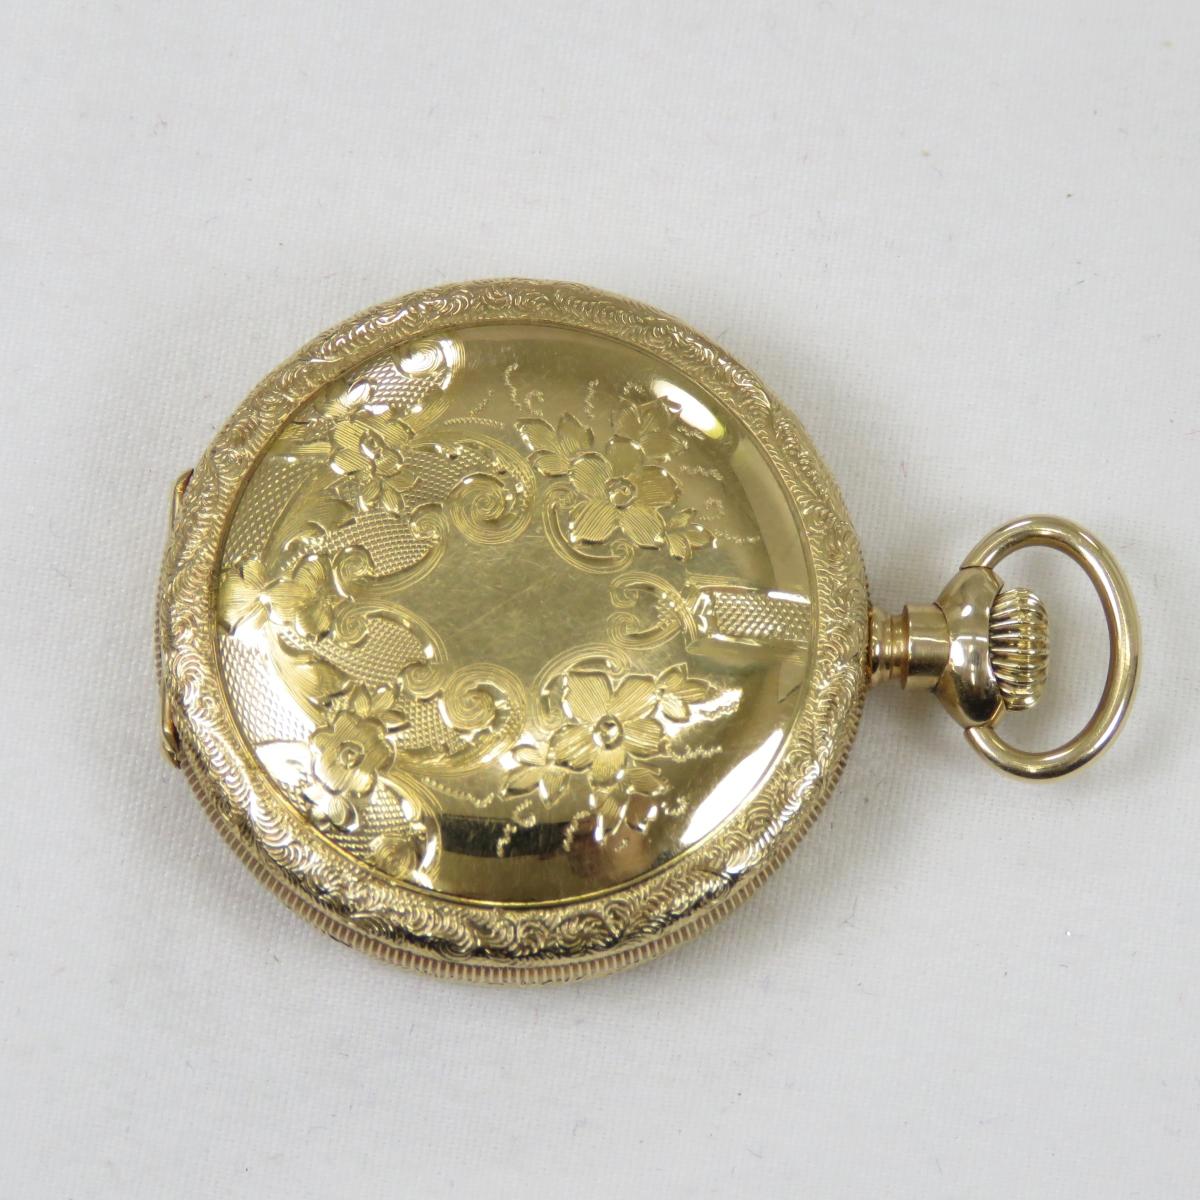 14kt Gold Elgin 7 Jewel 1904 Pocket Watch